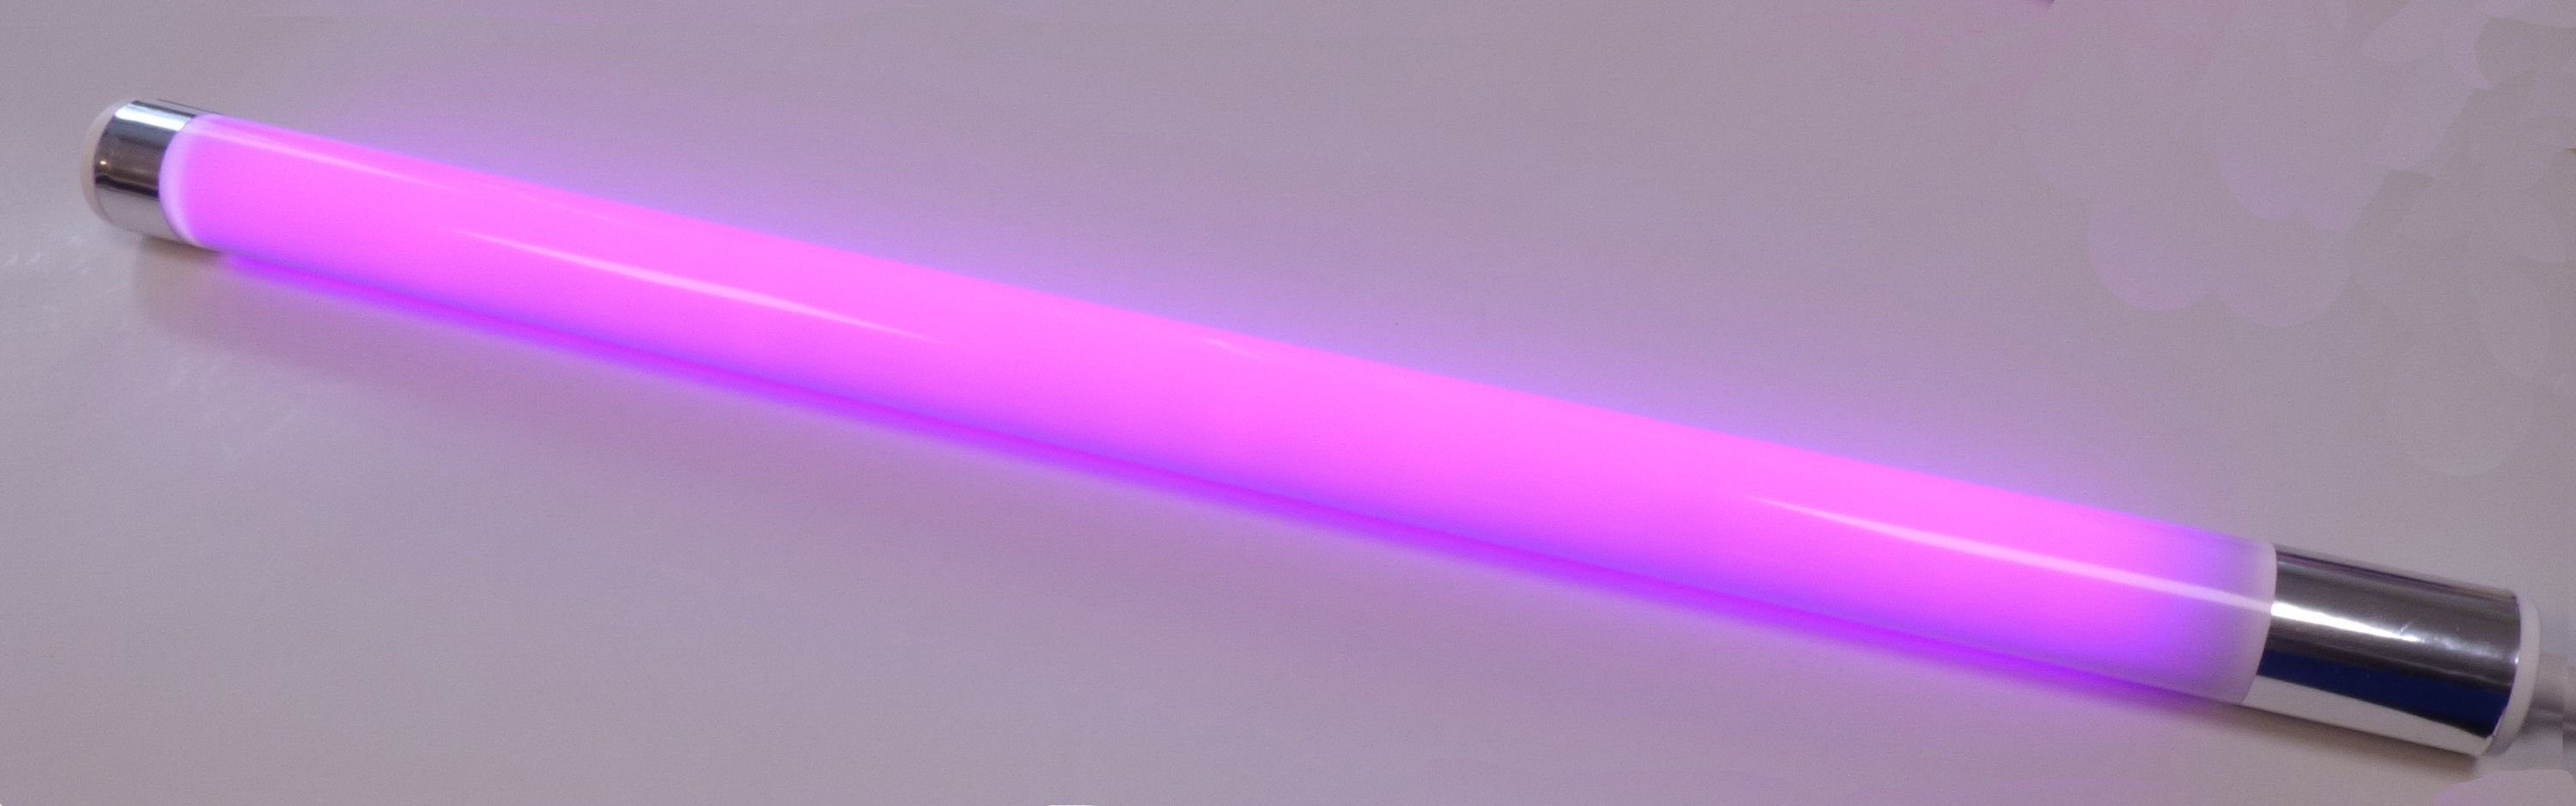 XENON LED Wandleuchte 9973 LED VISION Stab 24 W 153cm IP20 Kunststoff-Röhre violett, LED Röhre T8, Xenon